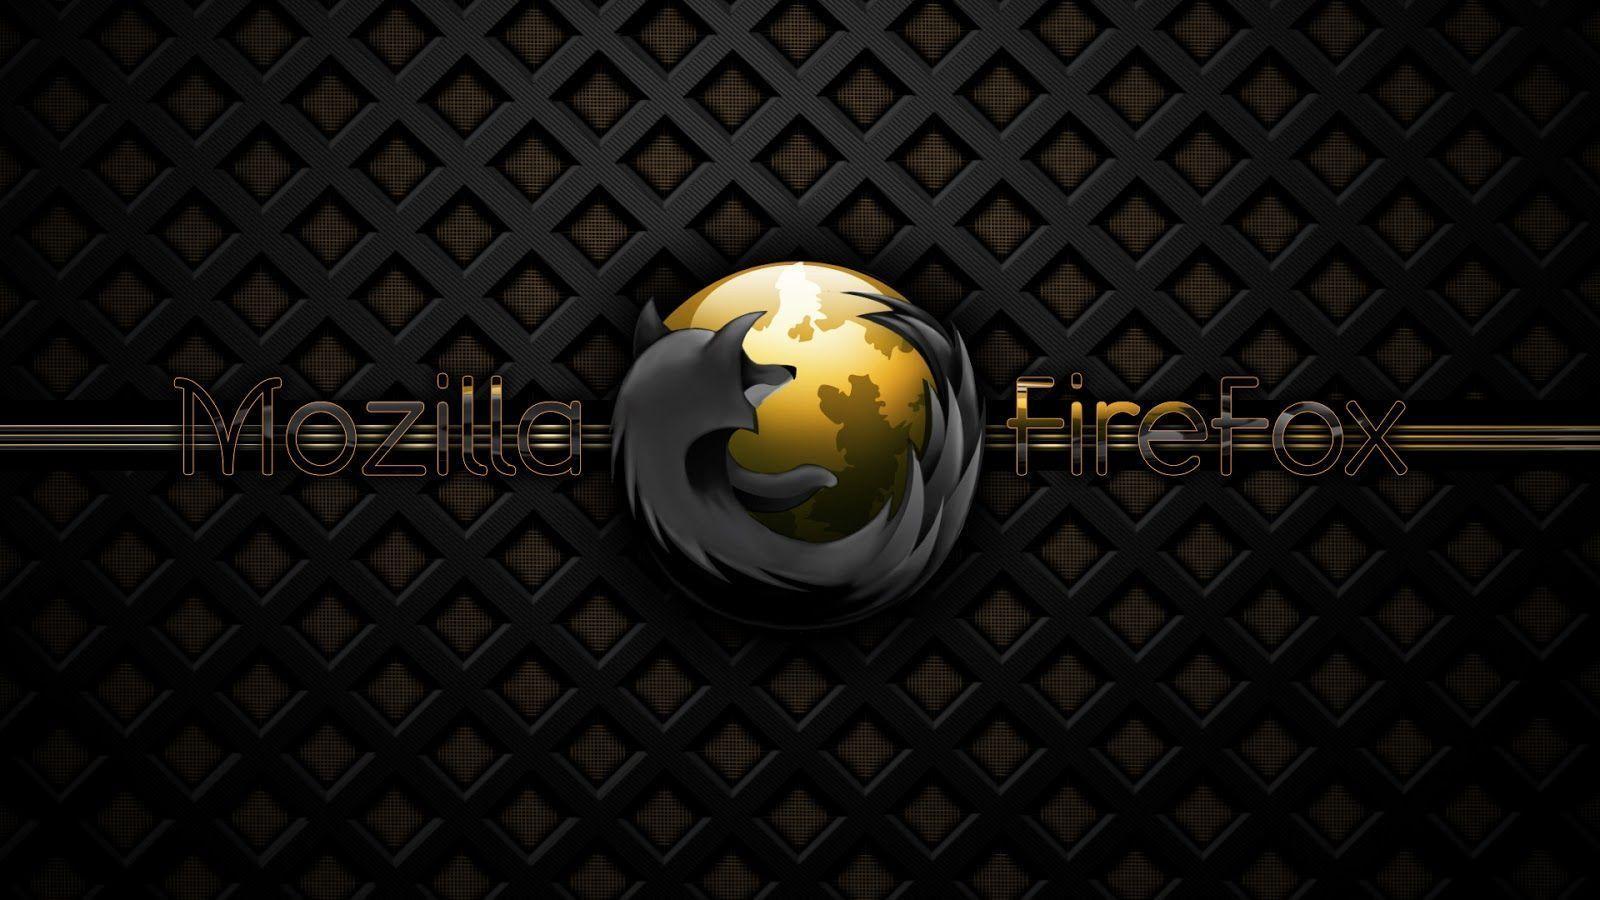 AmazingPict.com. Mozilla Firefox Wallpaper Desktop